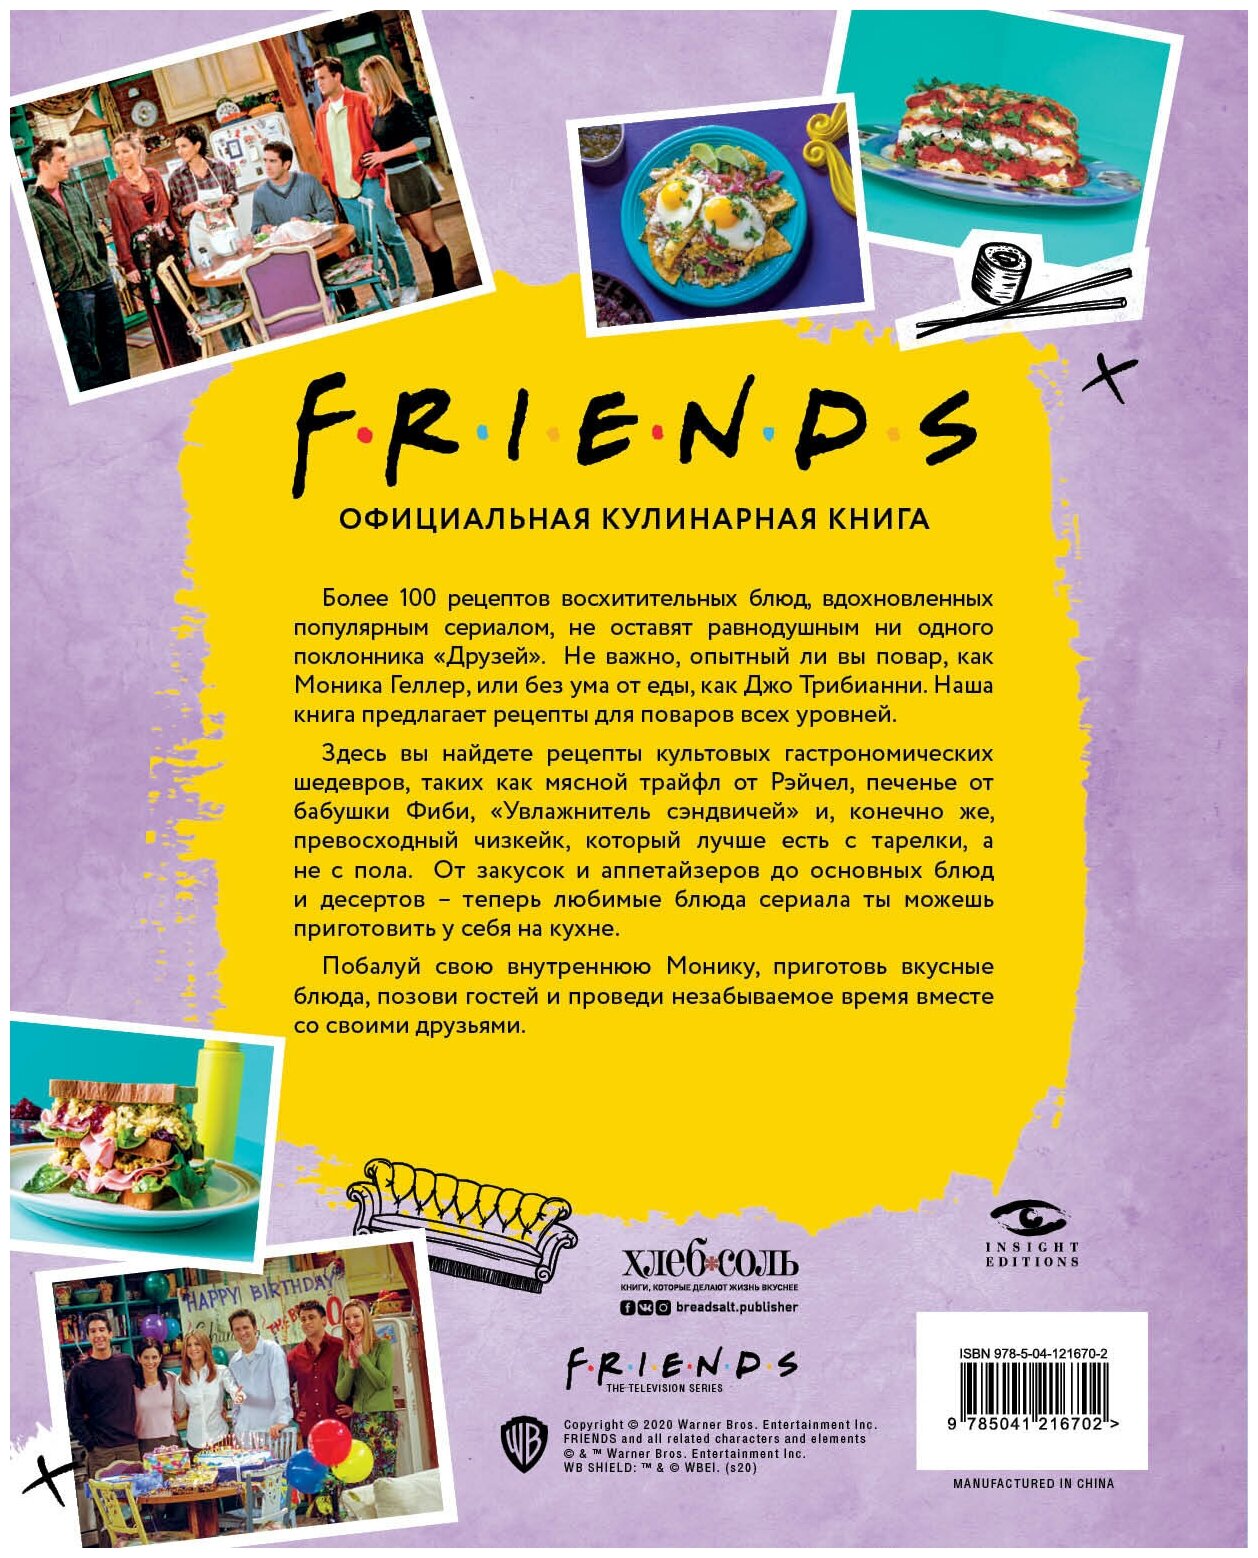 Friends. Официальная кулинарная книга - фото №10